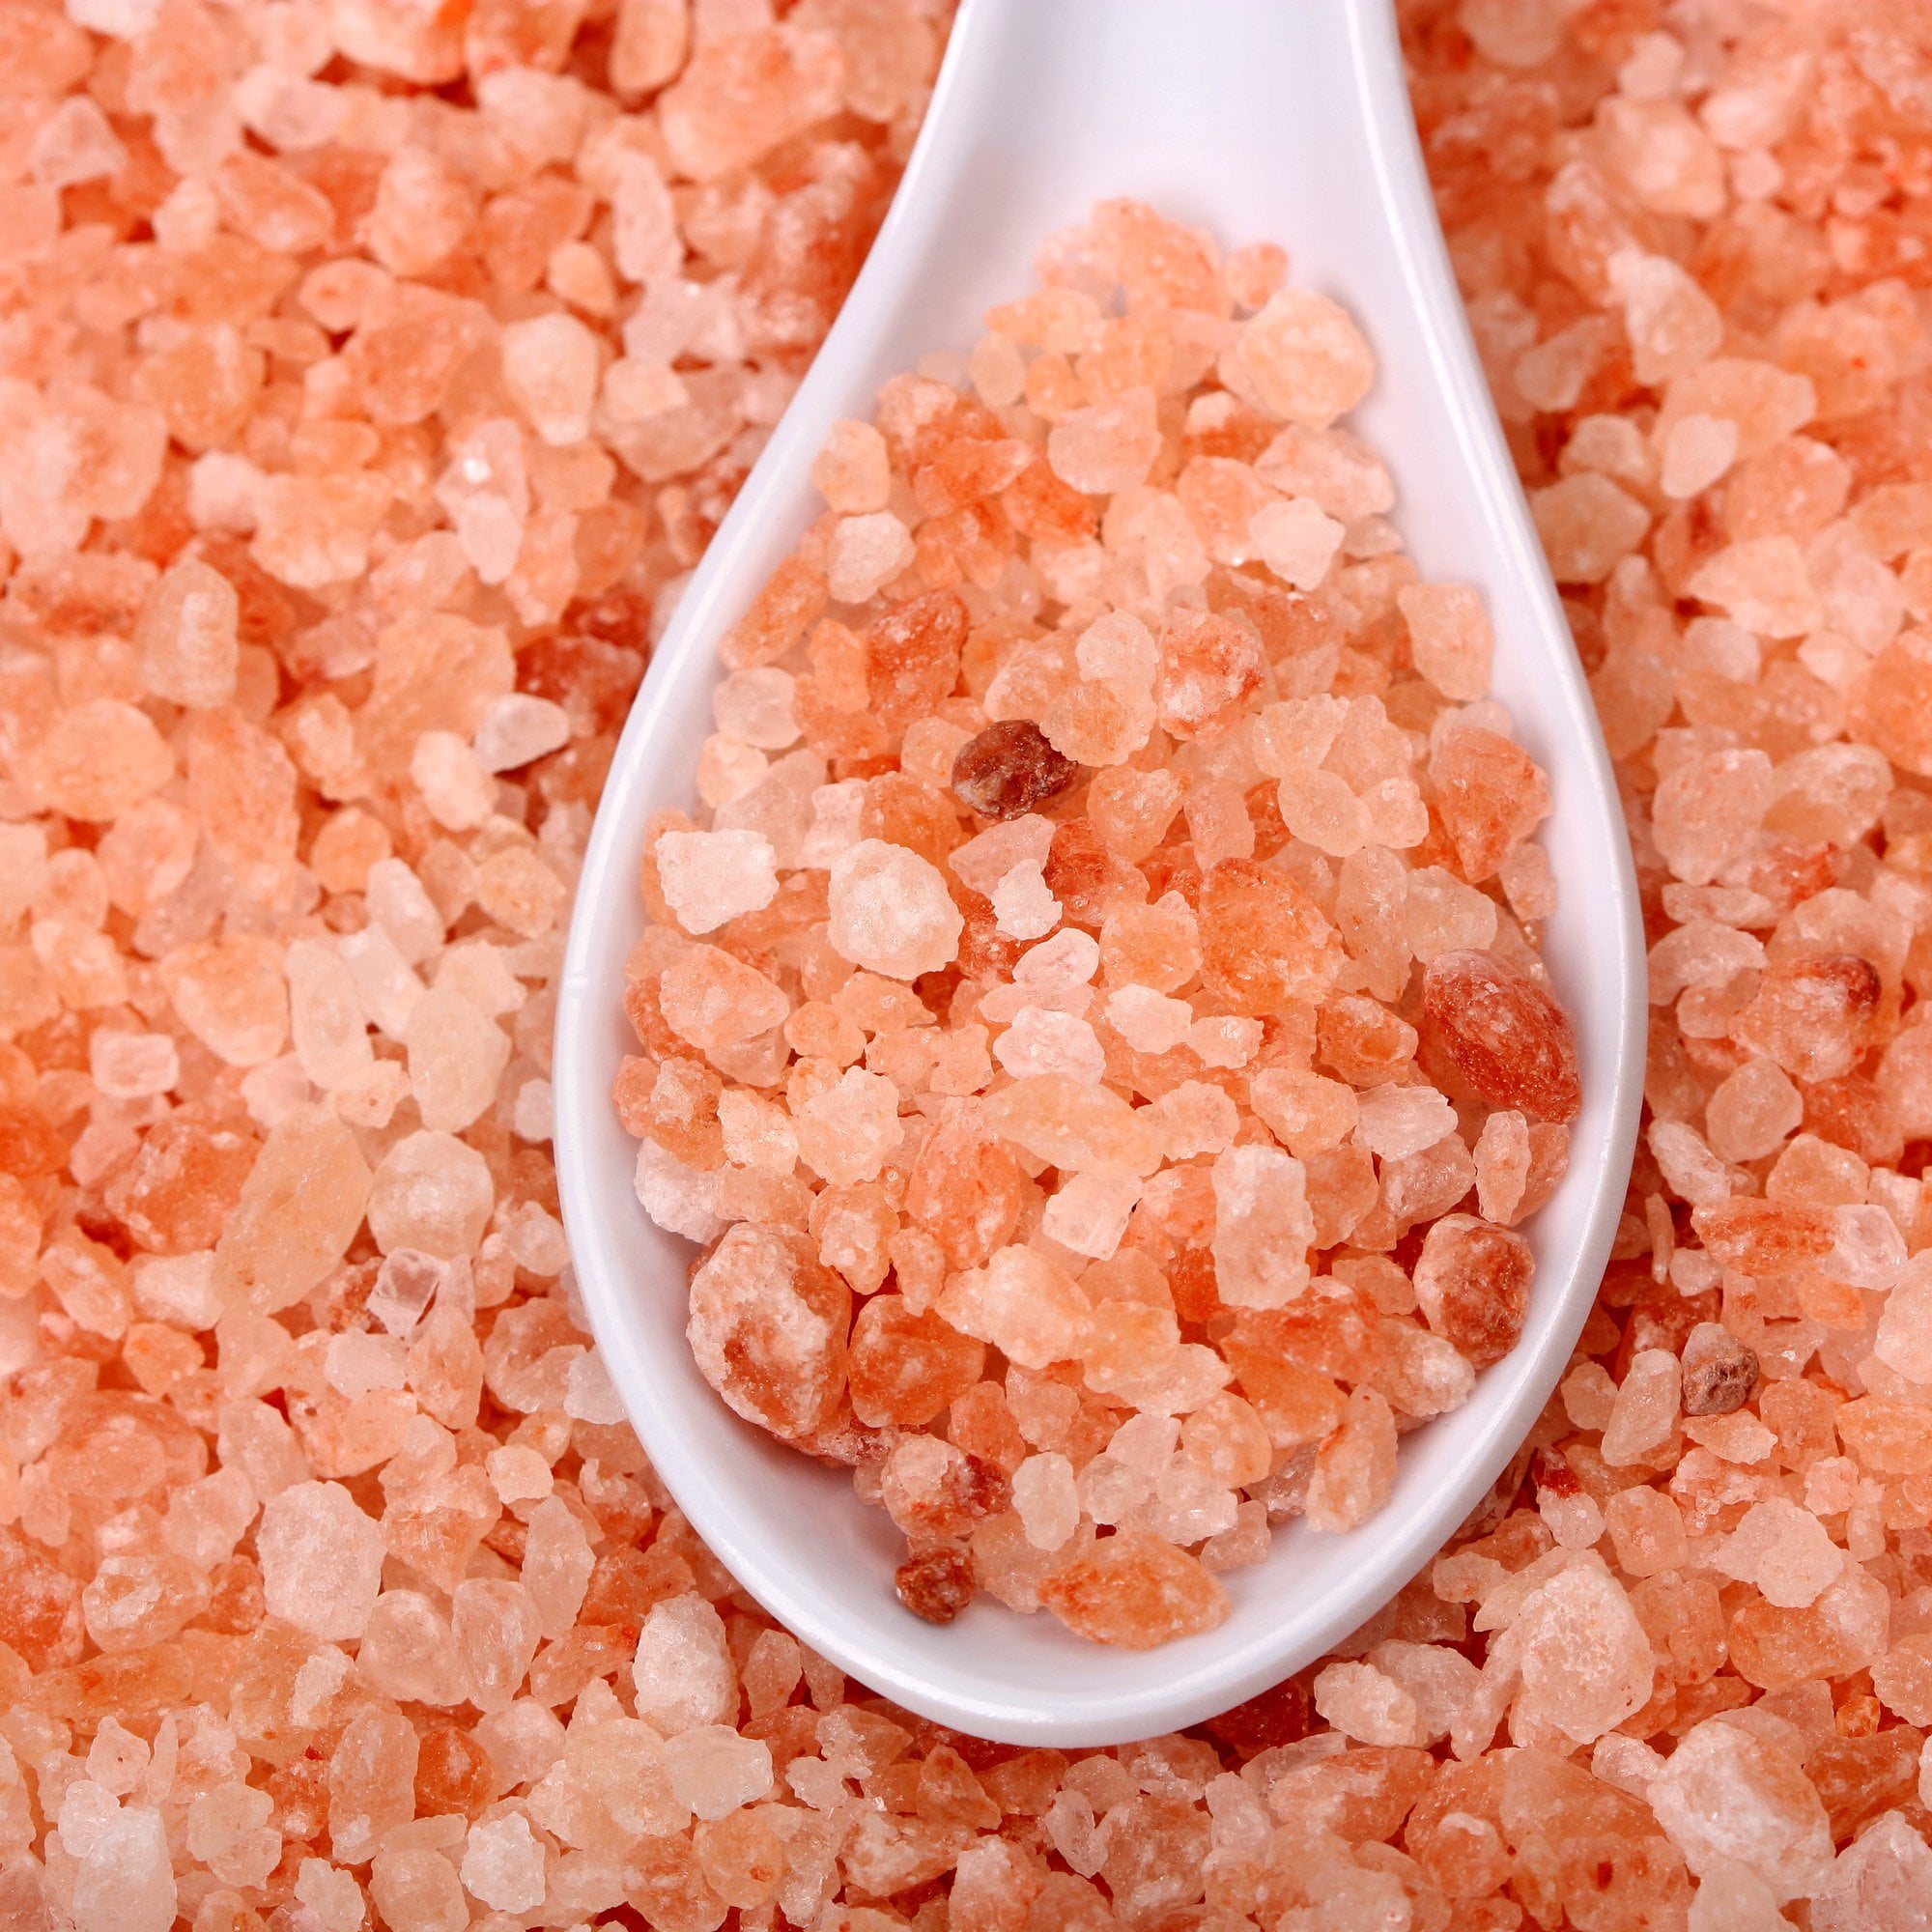 The Spice Lab Coarse Himalayan Pink Salt & Premium Black Pepper Set –